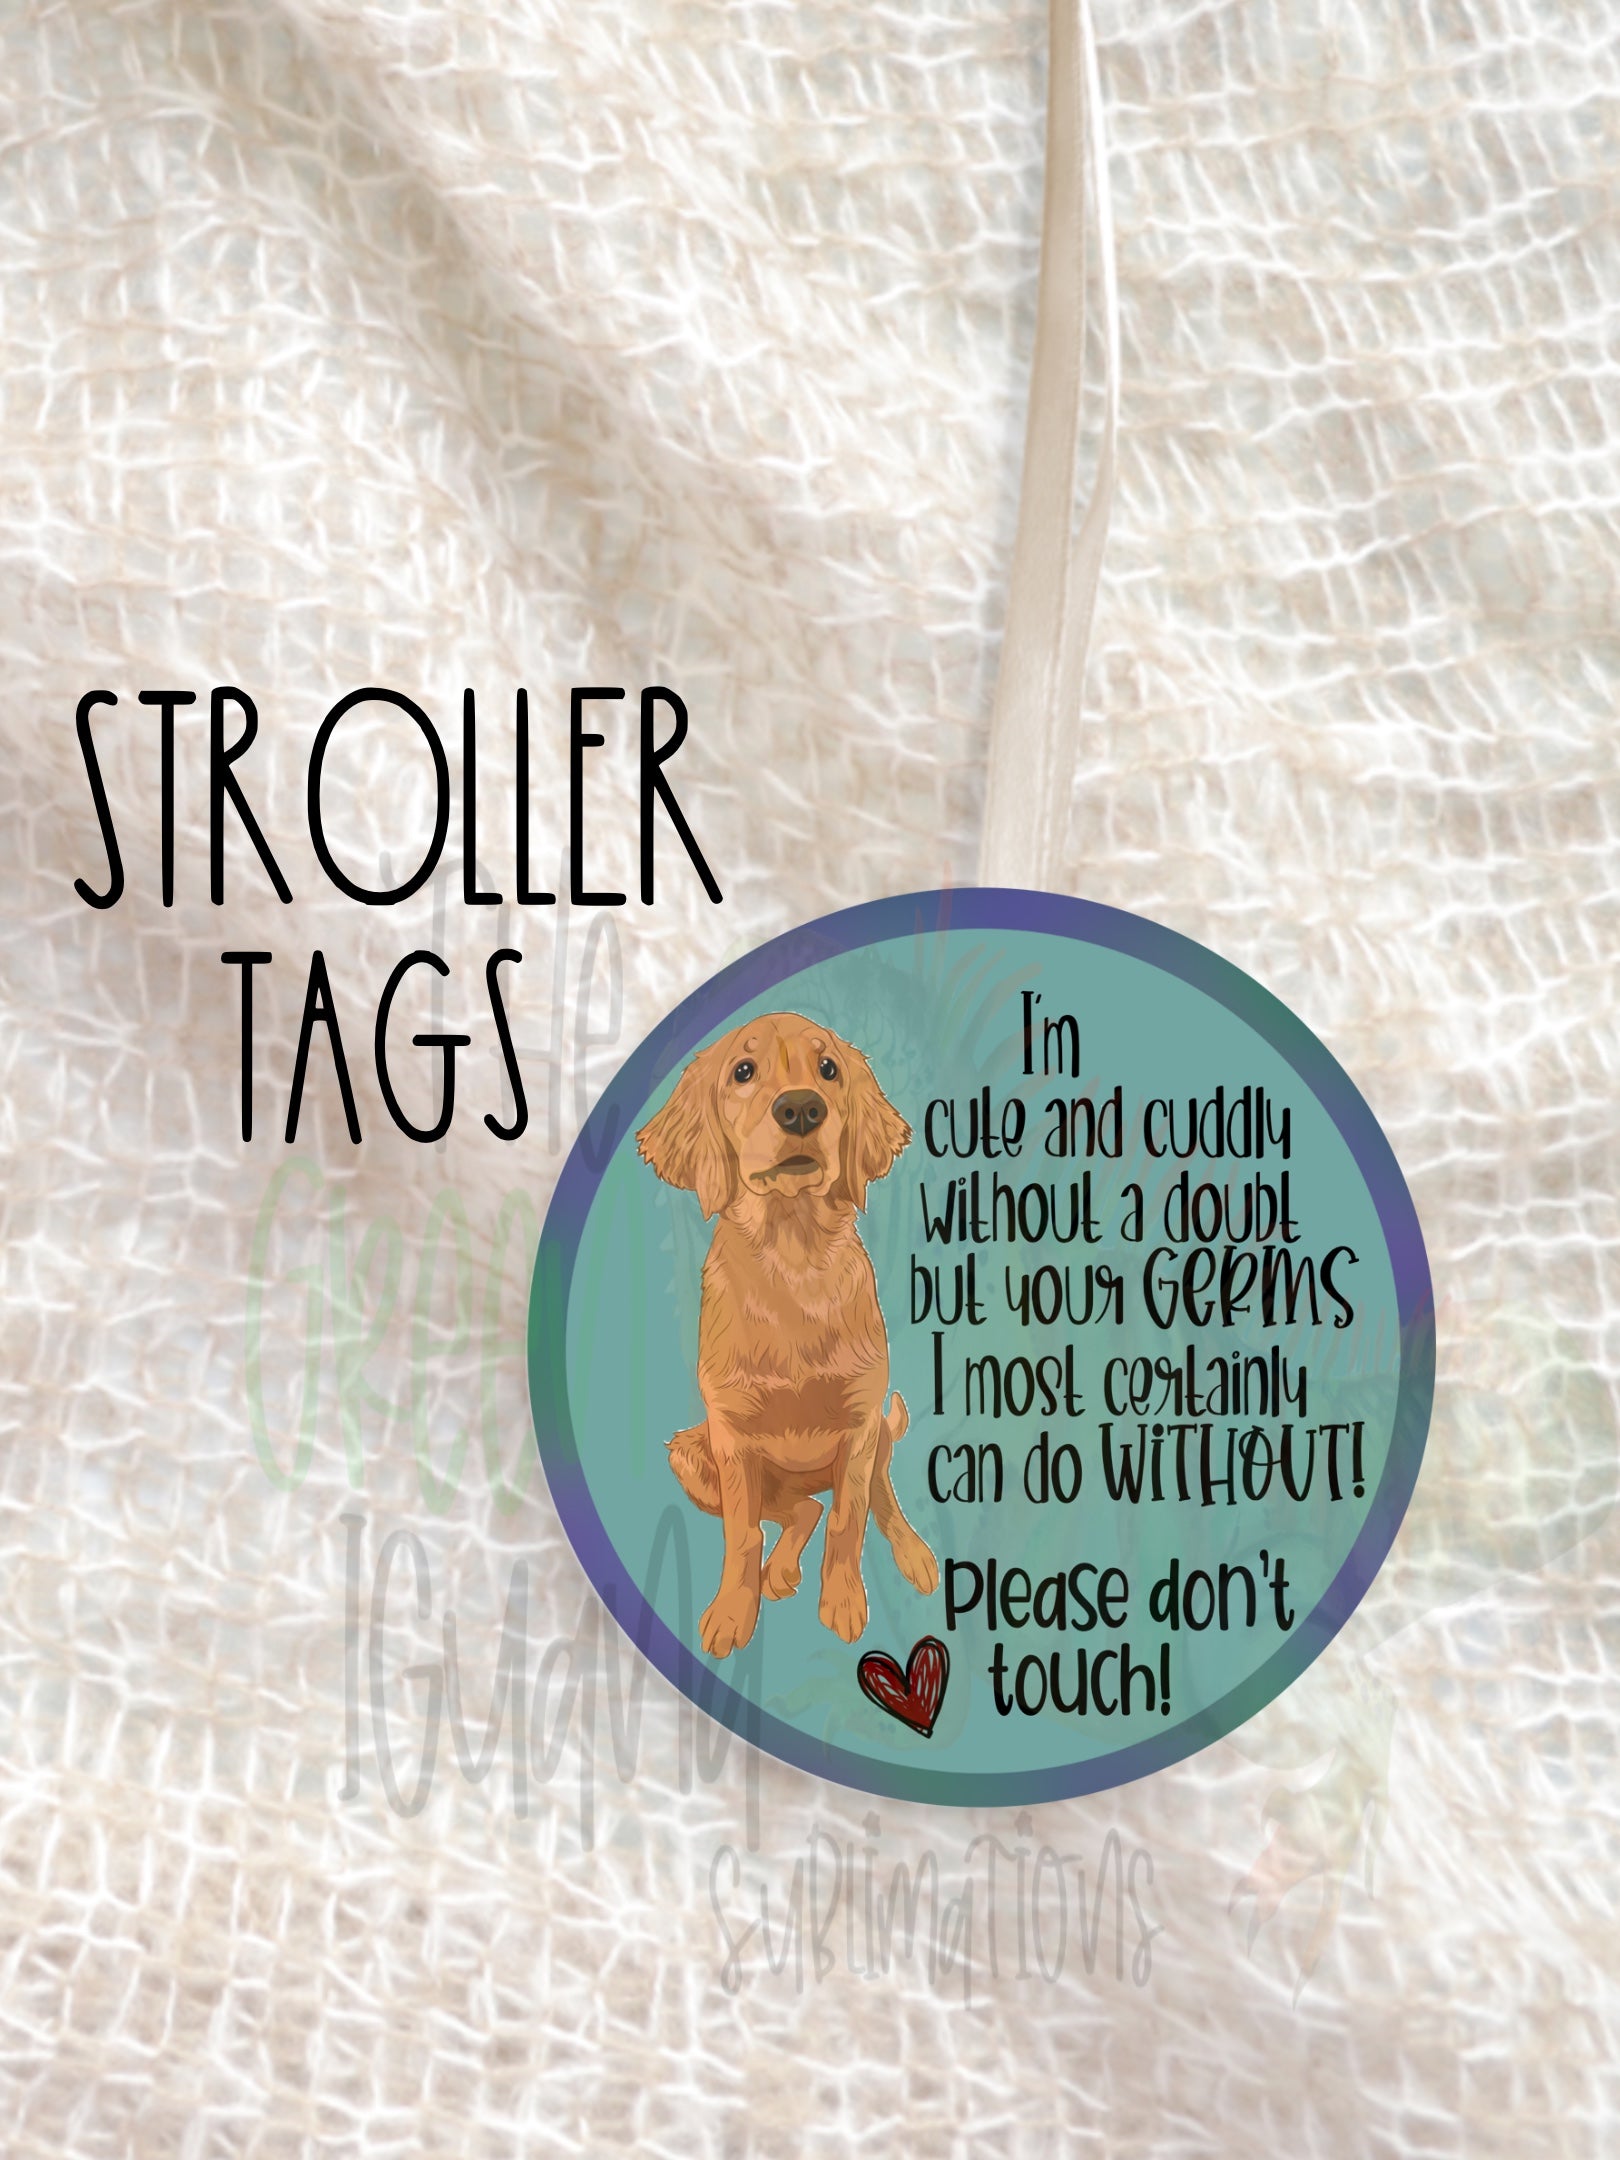 I’m cute and cuddly (puppy) - Stroller tag